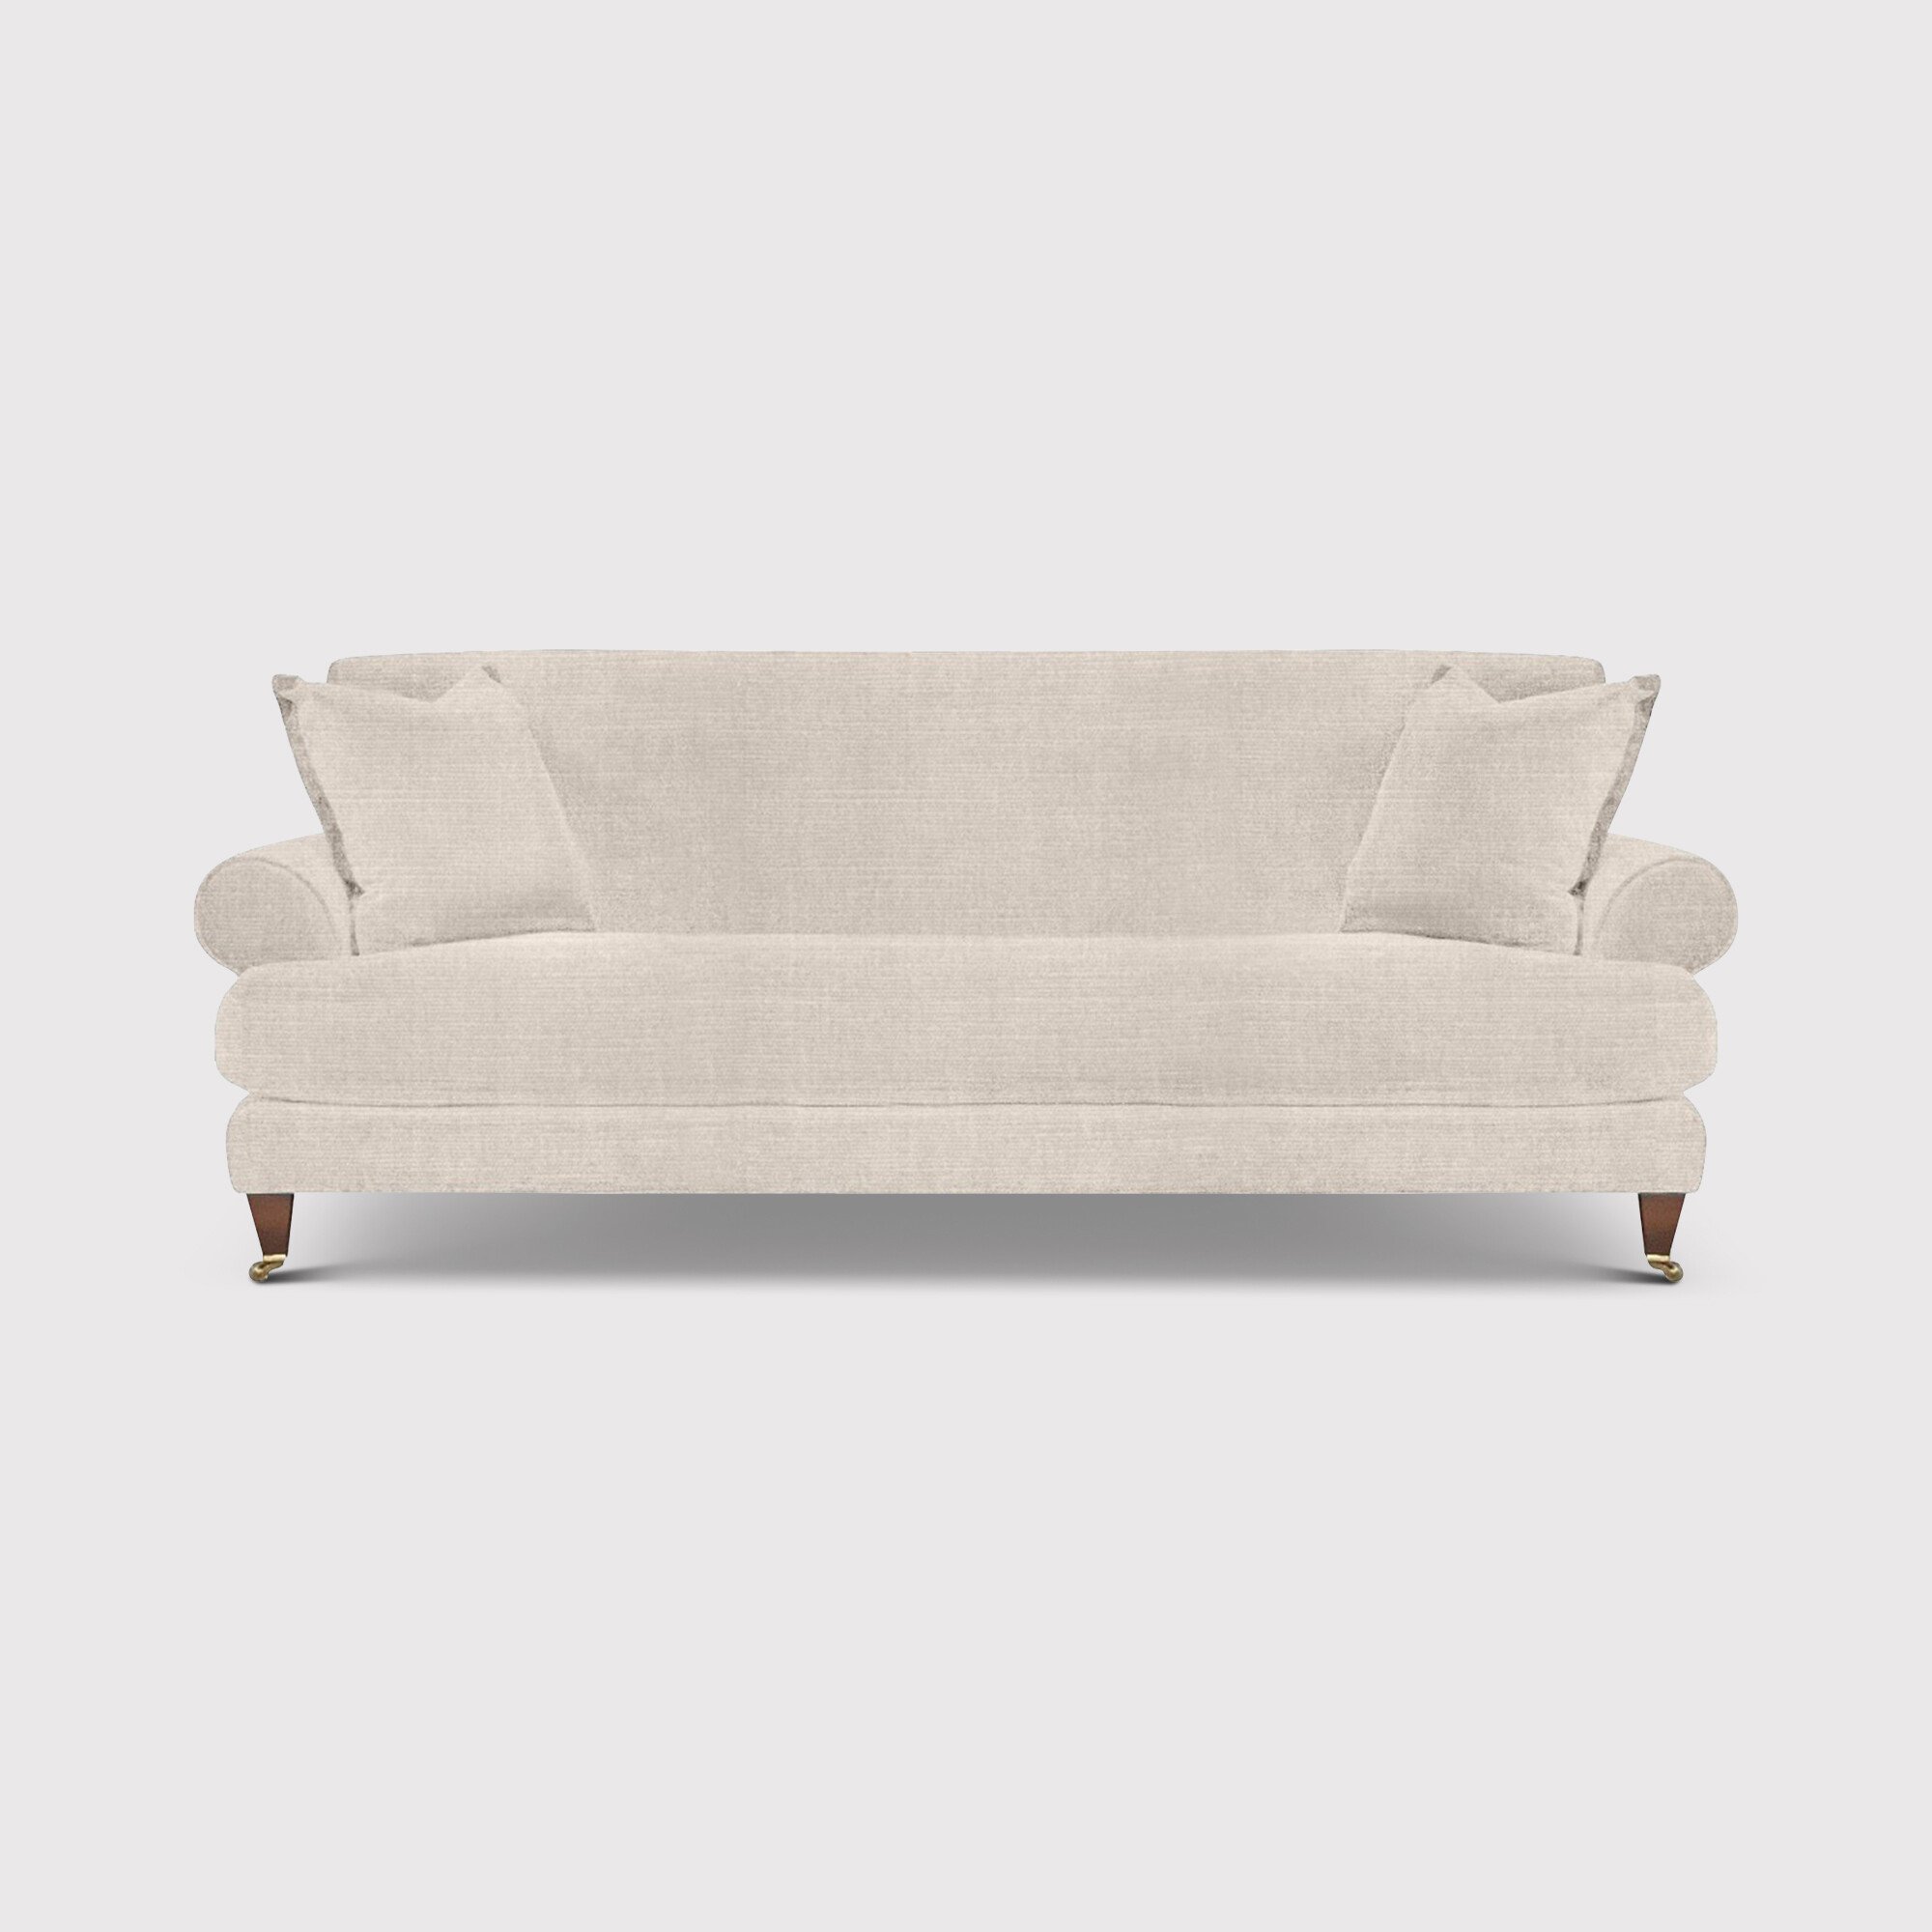 Fairlawn 3 Seater Sofa, Neutral Fabric | Barker & Stonehouse